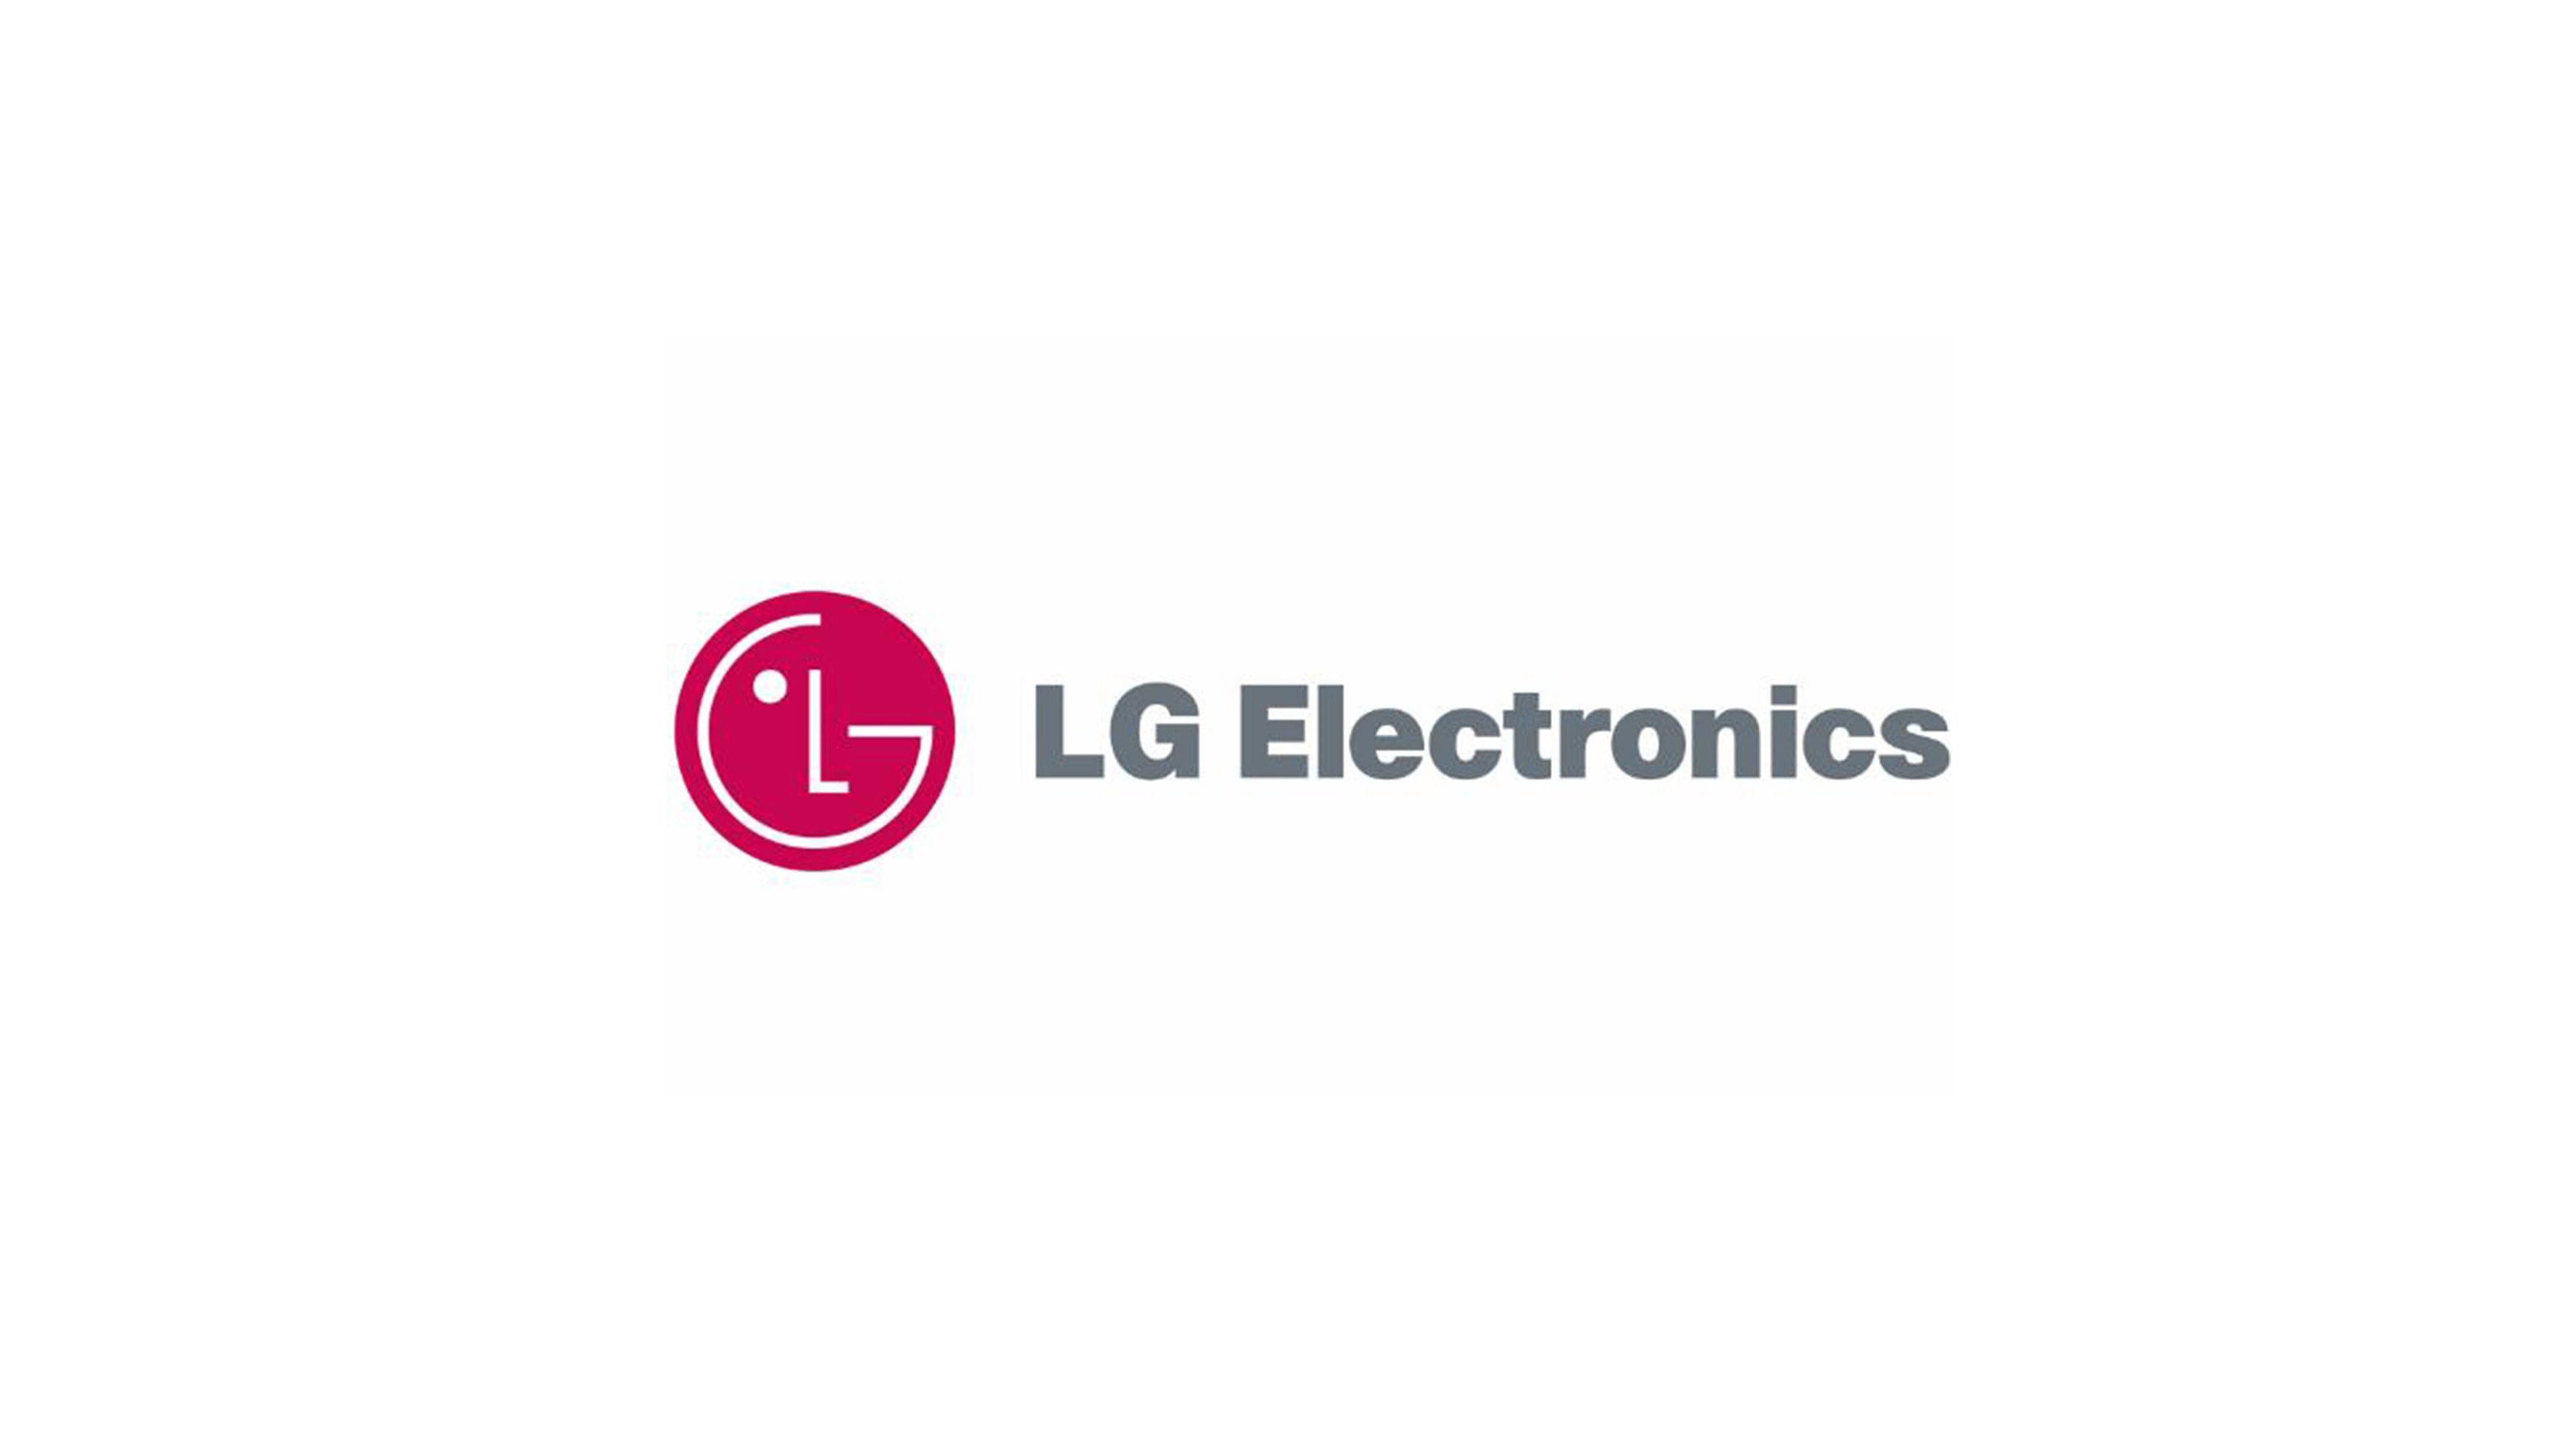 lg电子logo图片含义/演变/变迁及品牌介绍 - logo设计